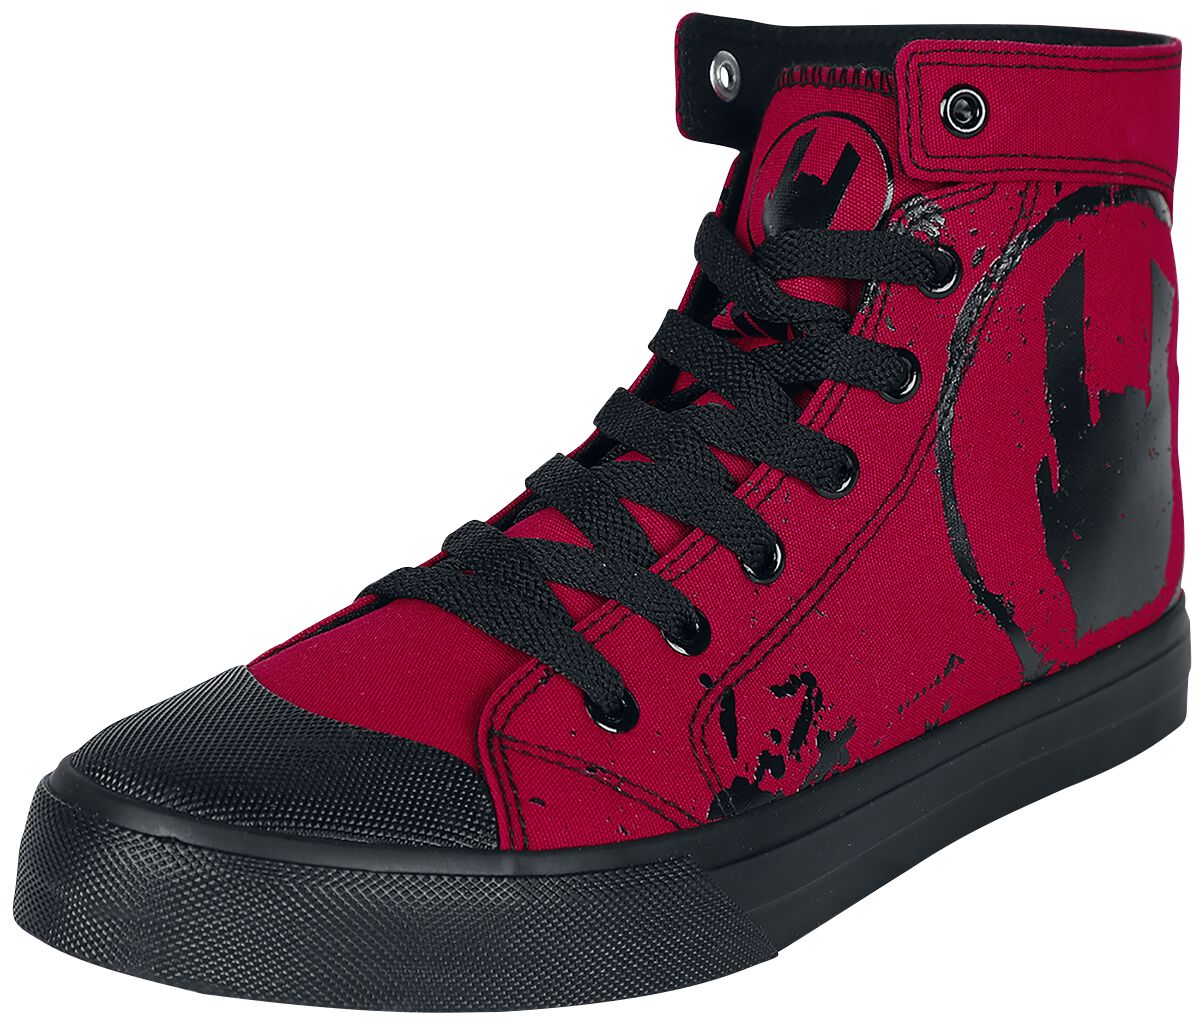 EMP Basic Collection Sneaker high - Rote Sneaker mit Rockhand-Print - EU37 bis EU39 - Größe EU37 - rot